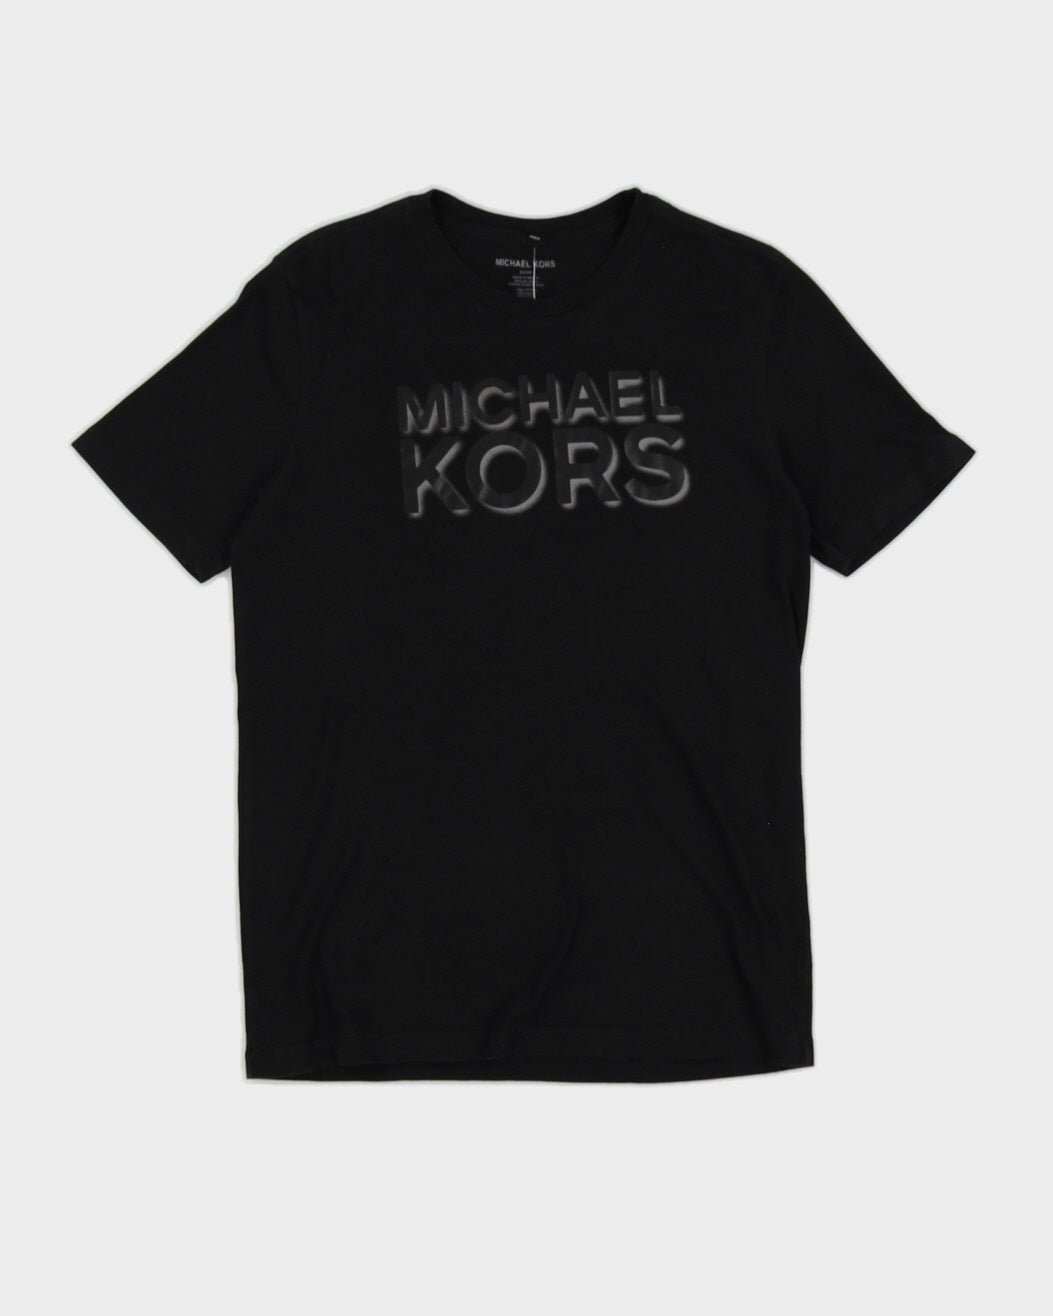 Black Michael Kors T-Shirt - S